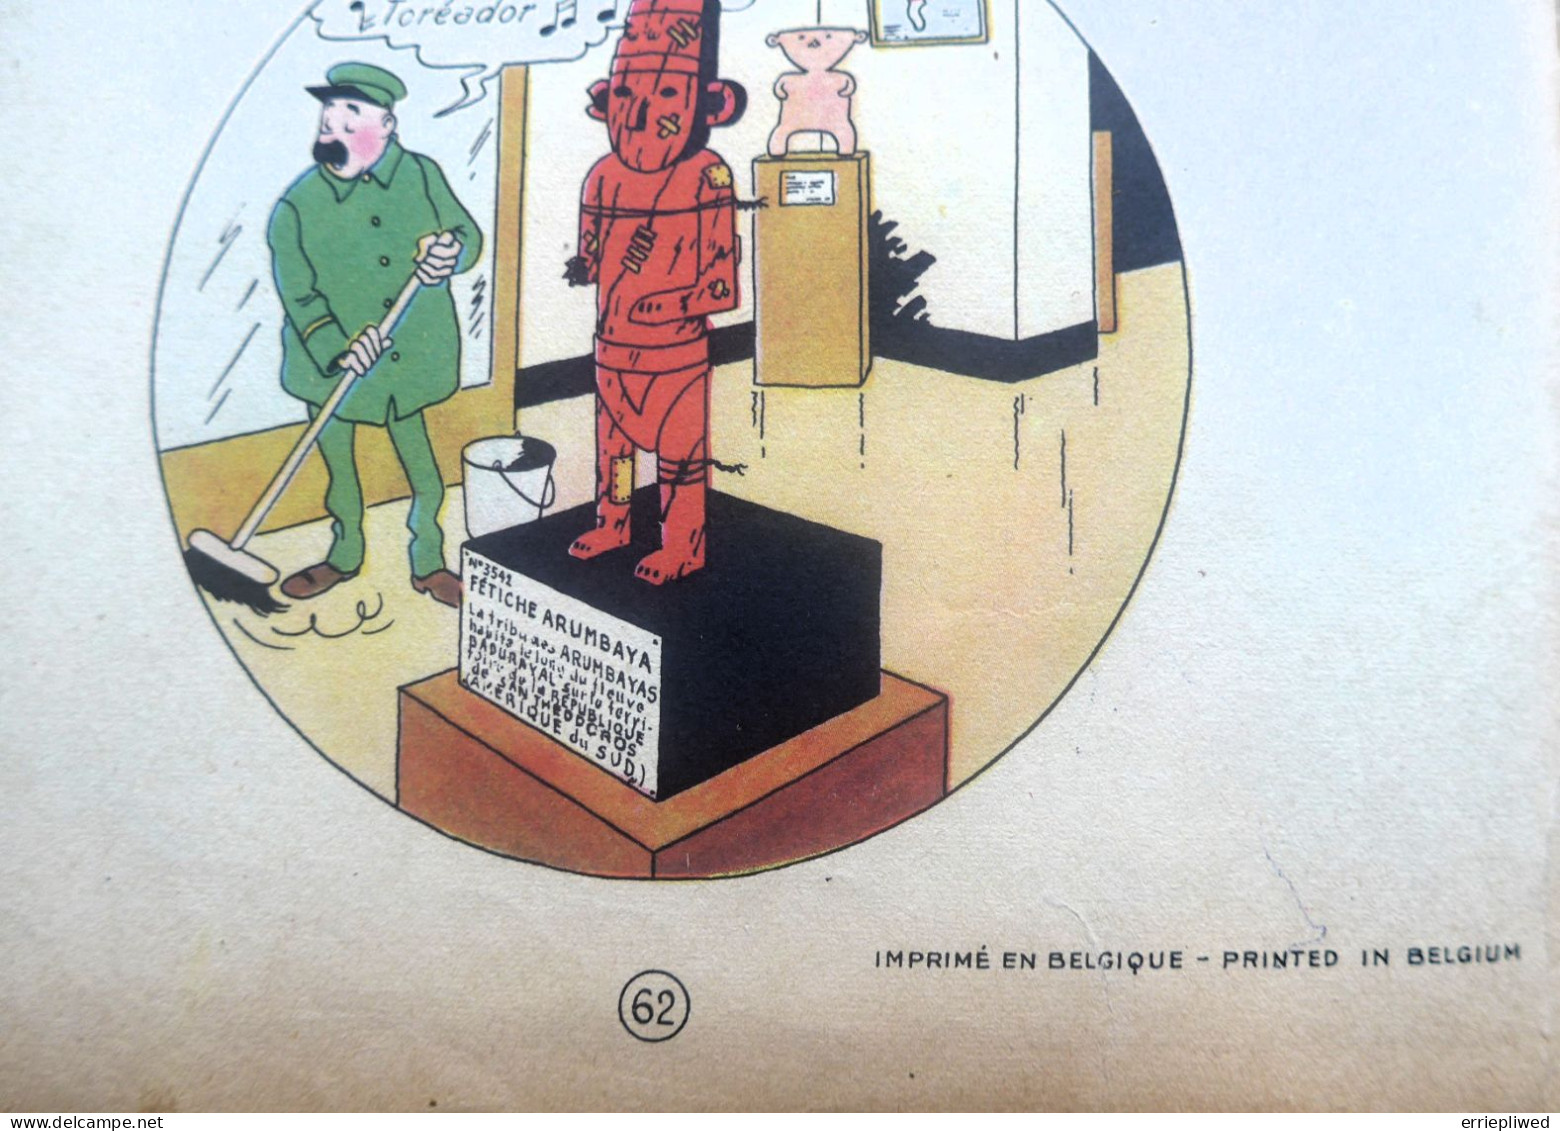 1944 - Tintin - L'Oreille Cassée